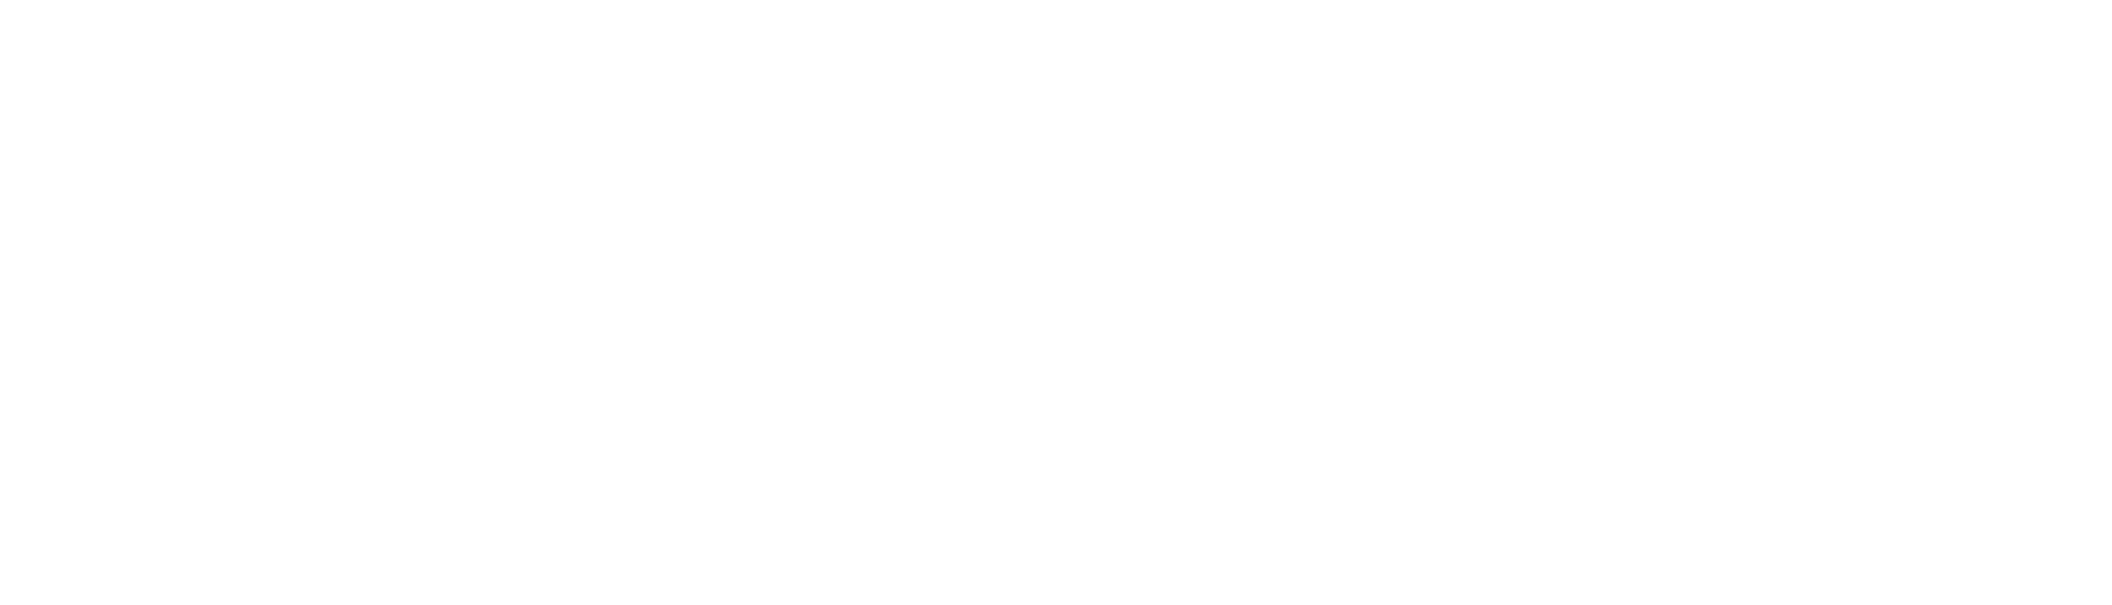 JCX Consulting